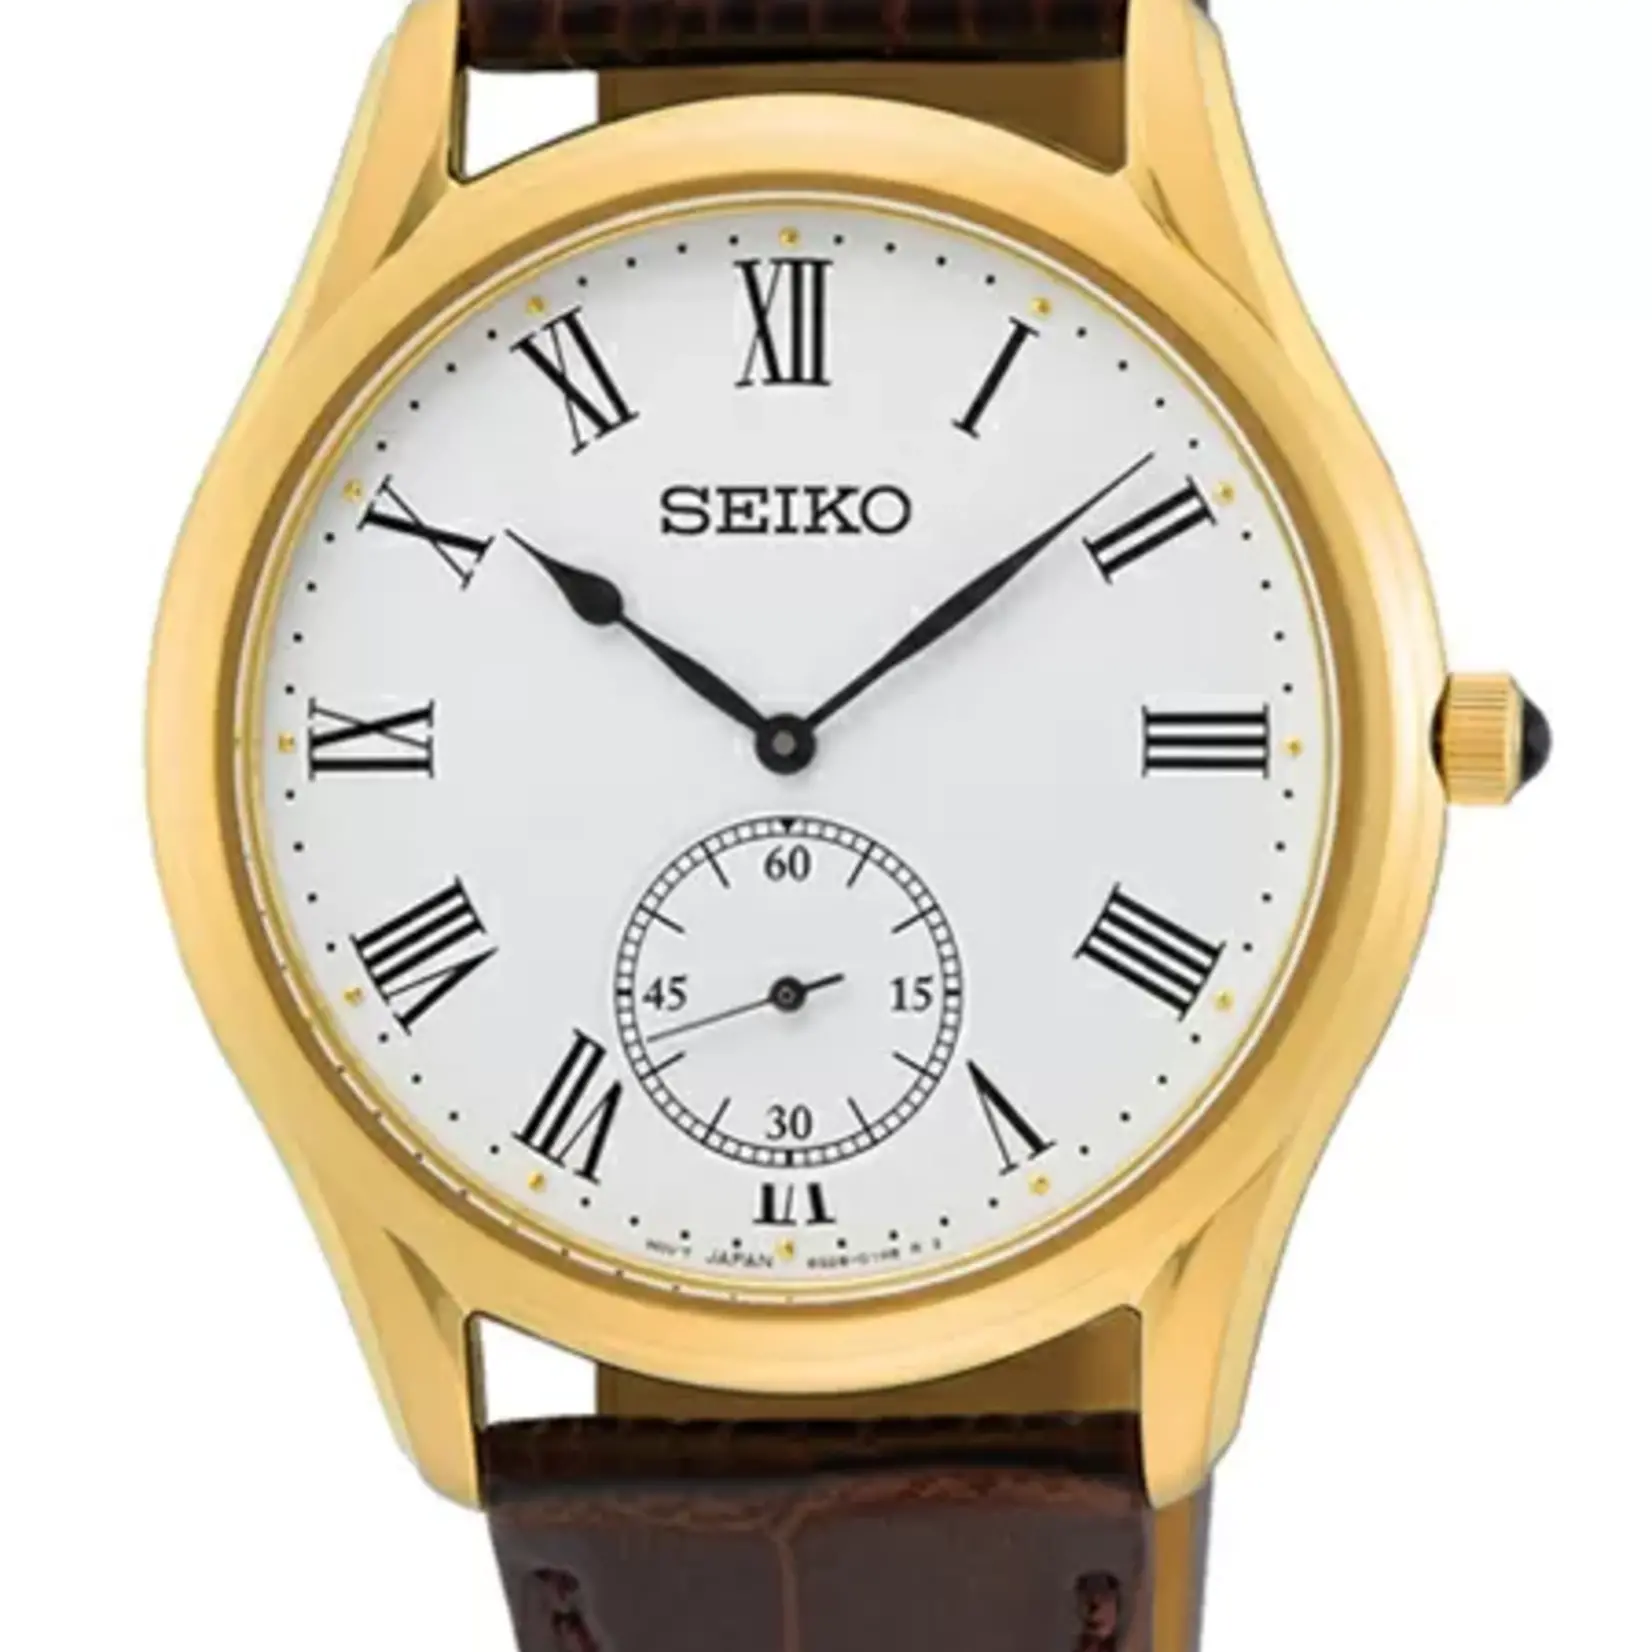 Seiko Seiko heren horloge srk050p1